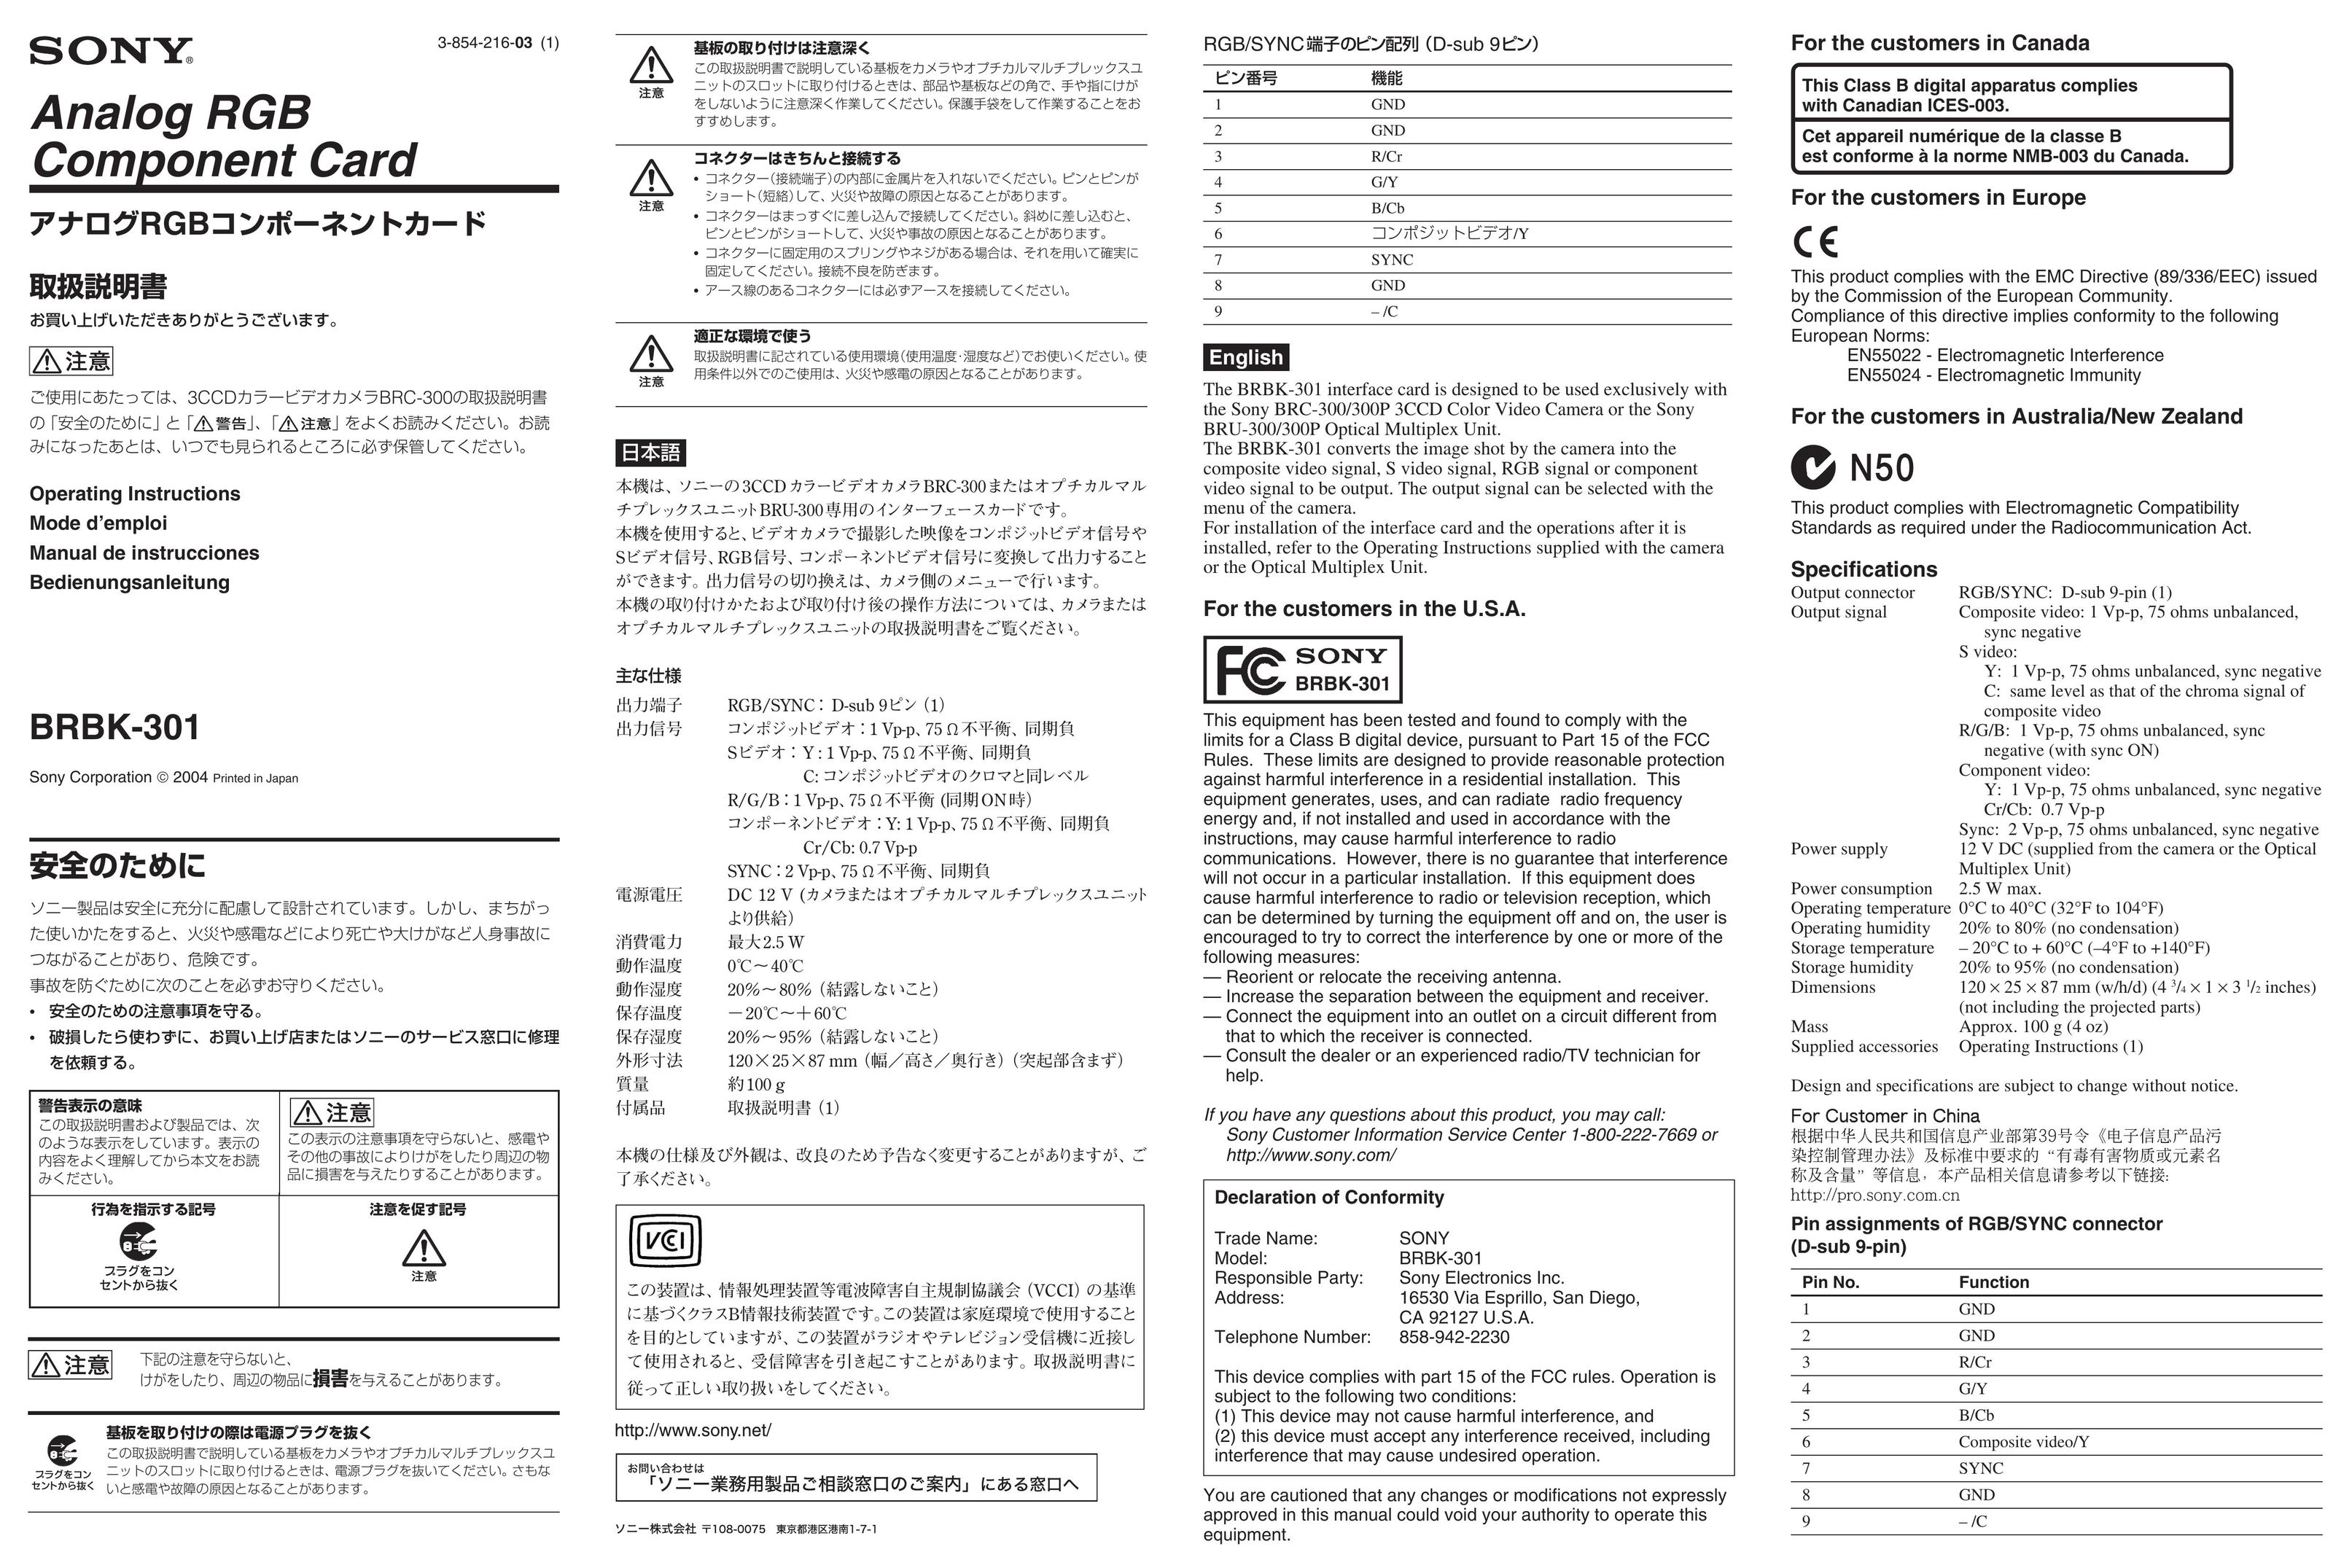 Sony BRBK-301 Network Card User Manual